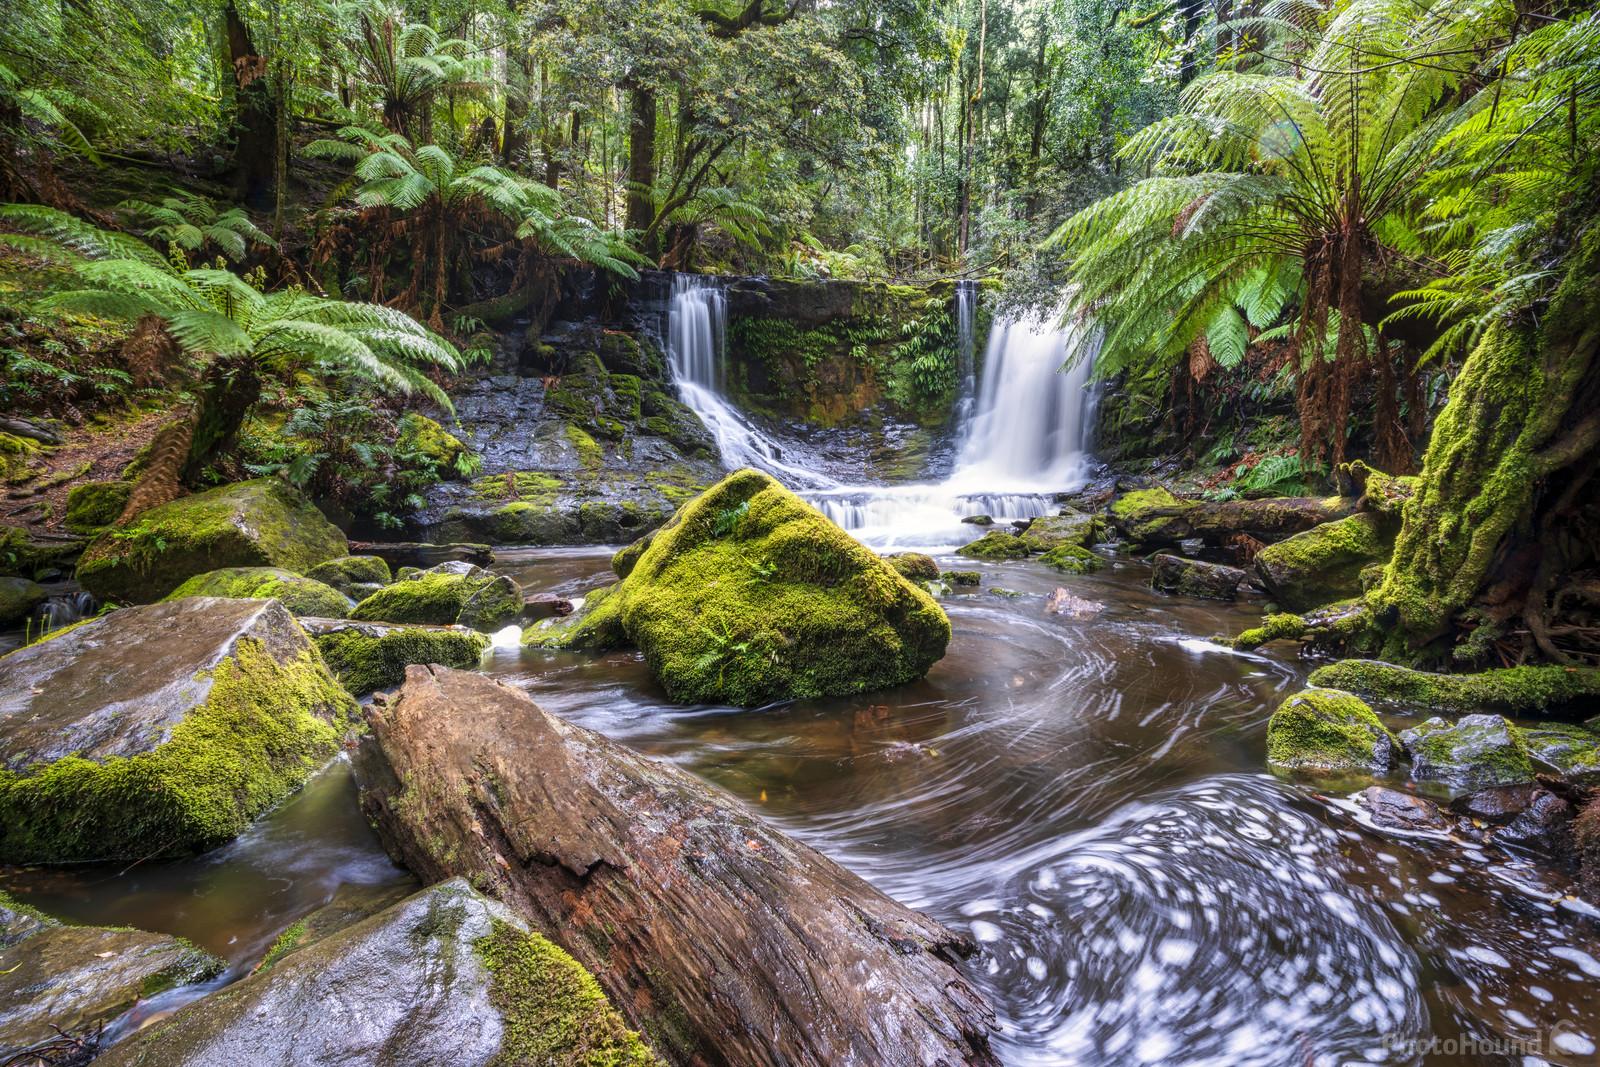 Image of Horseshoe Falls, Tasmania by Christian Klaus